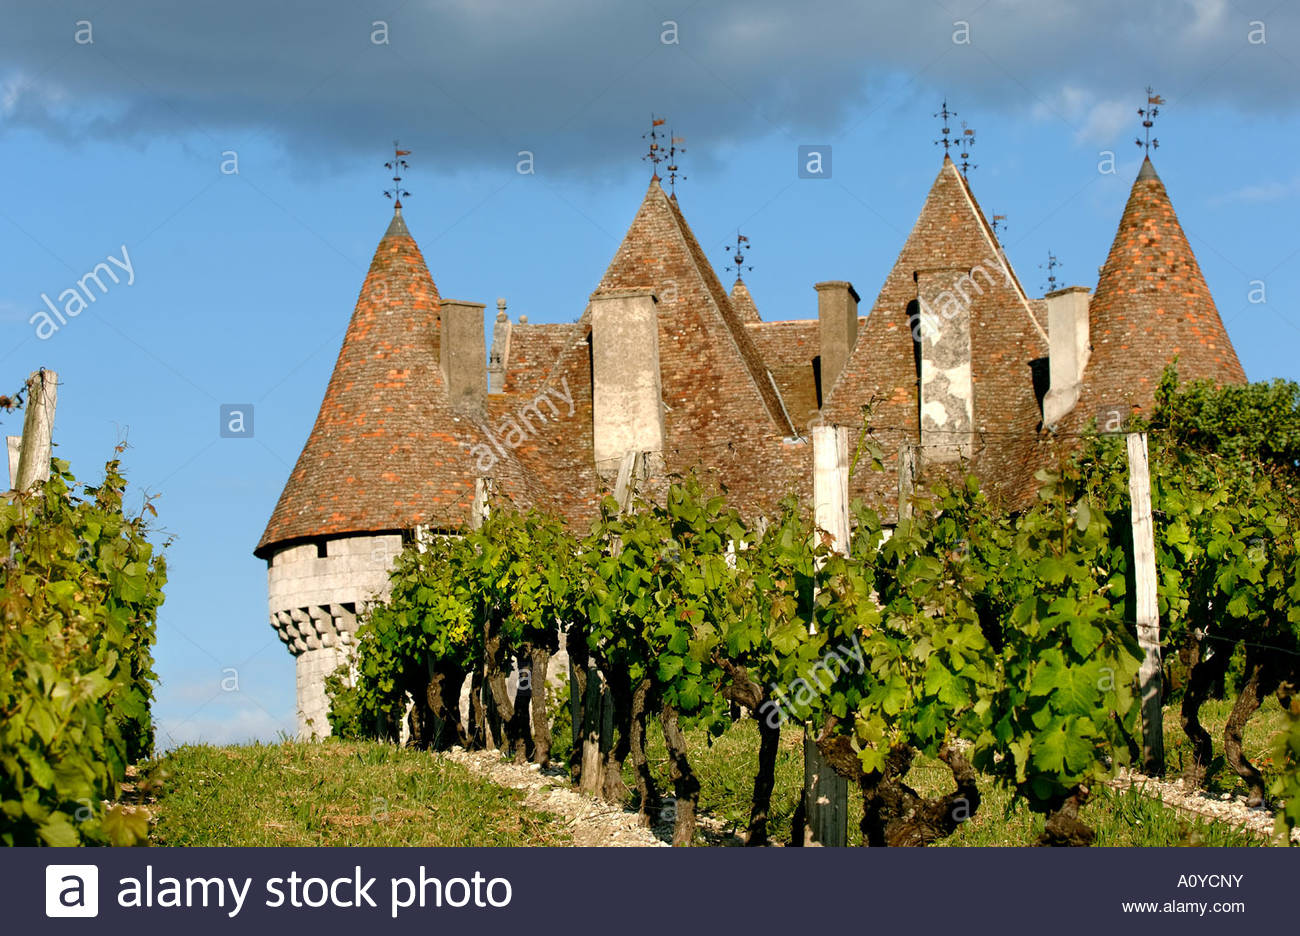 Château of Monbazillac, Vineyards in Bergerac district, South west France  ,Vinelandscape - Stock